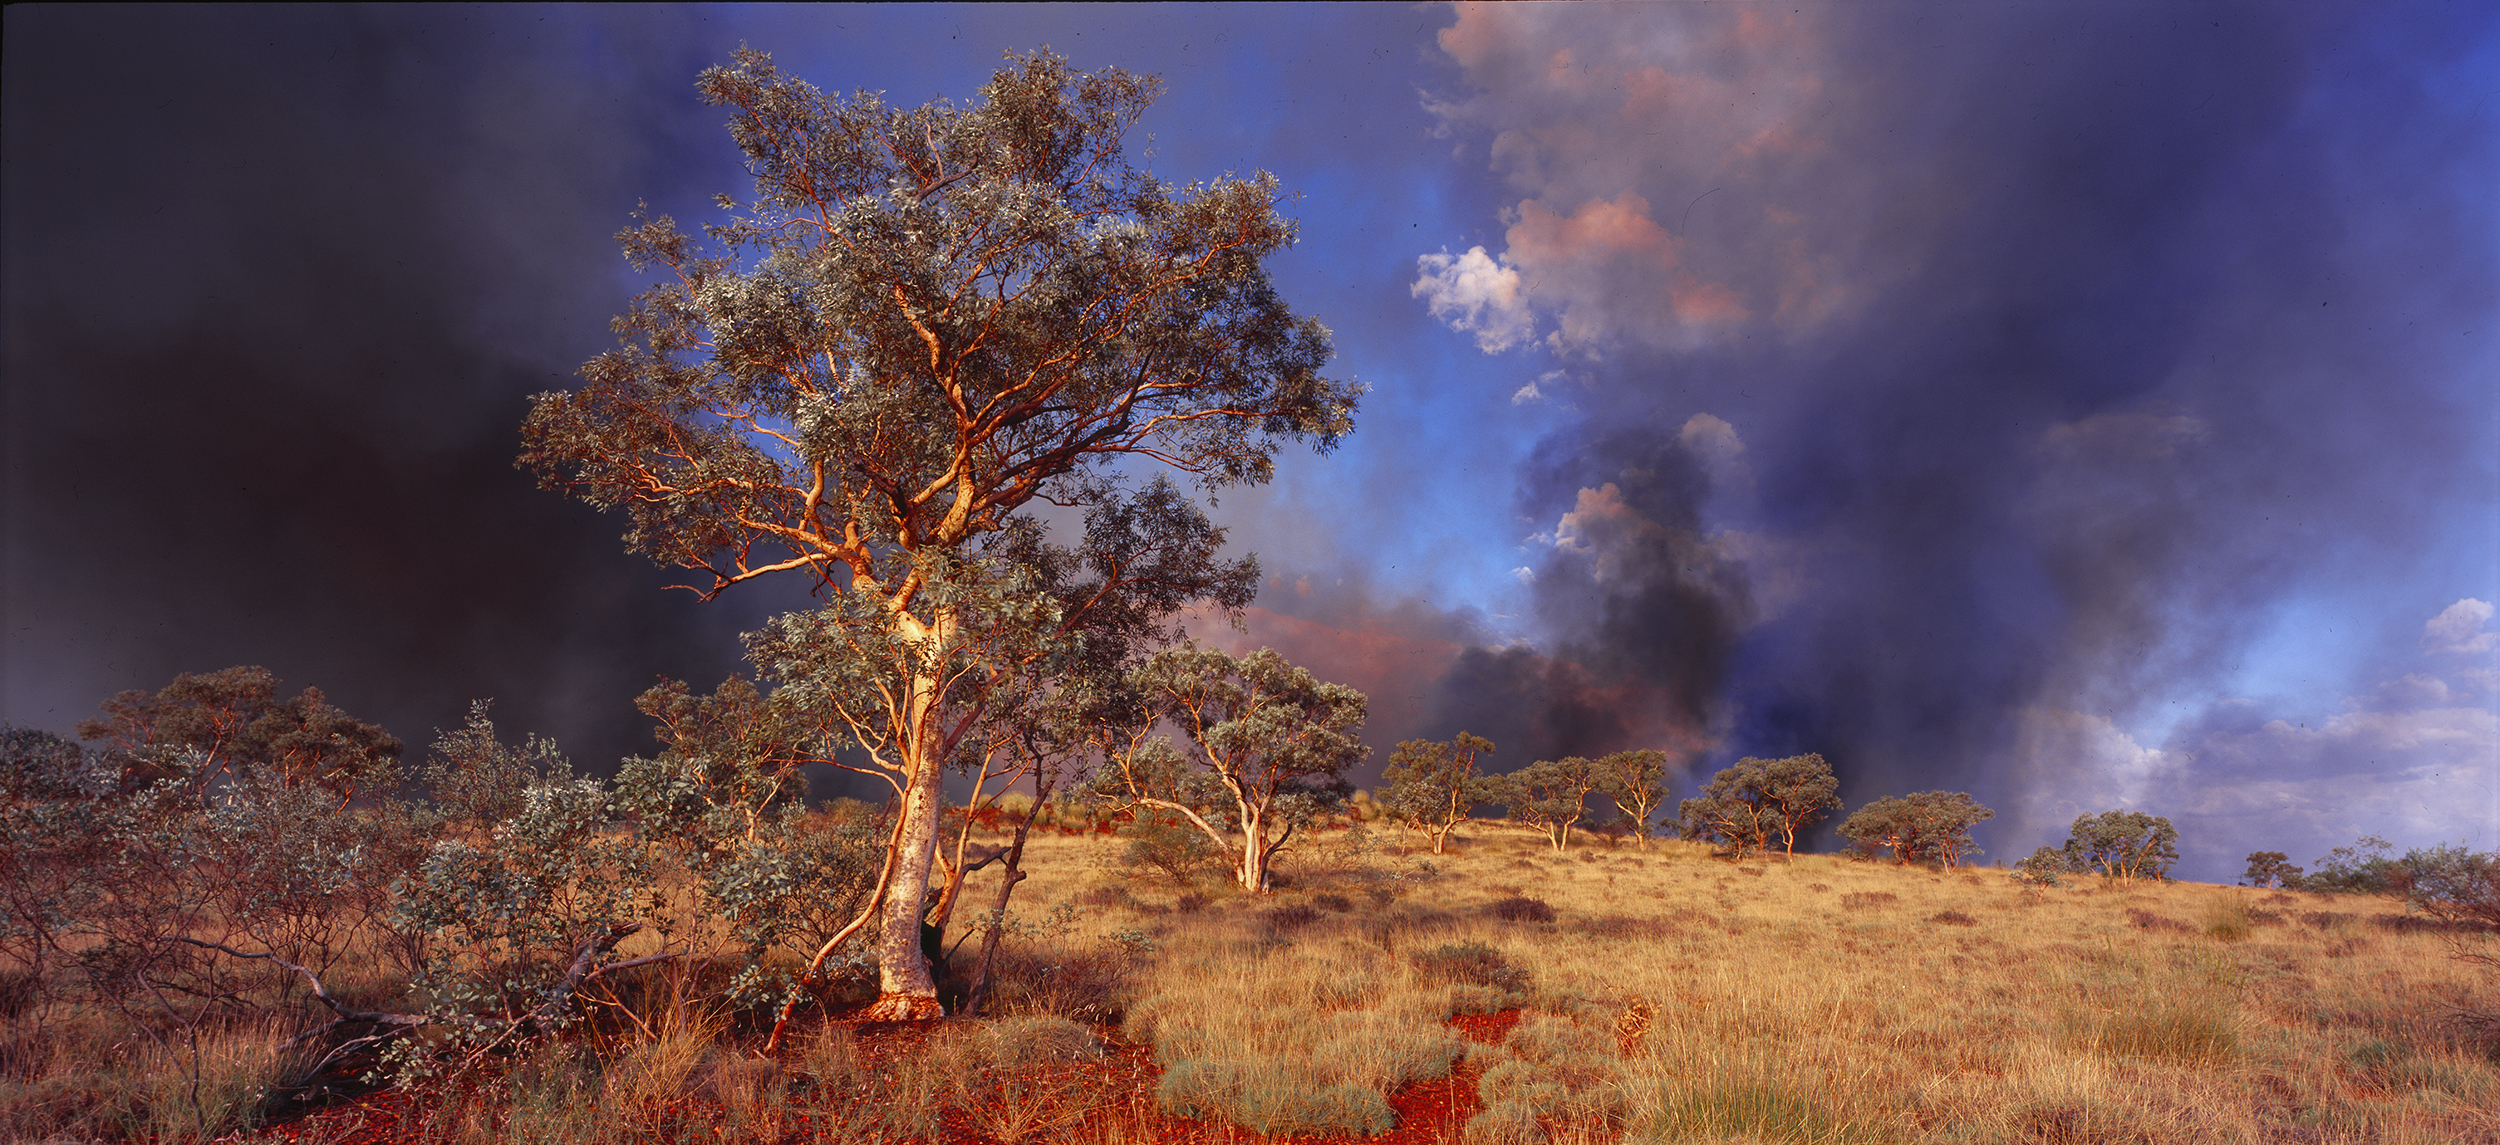  Spinifex Fire, Newman, Western Australia, 2013. 